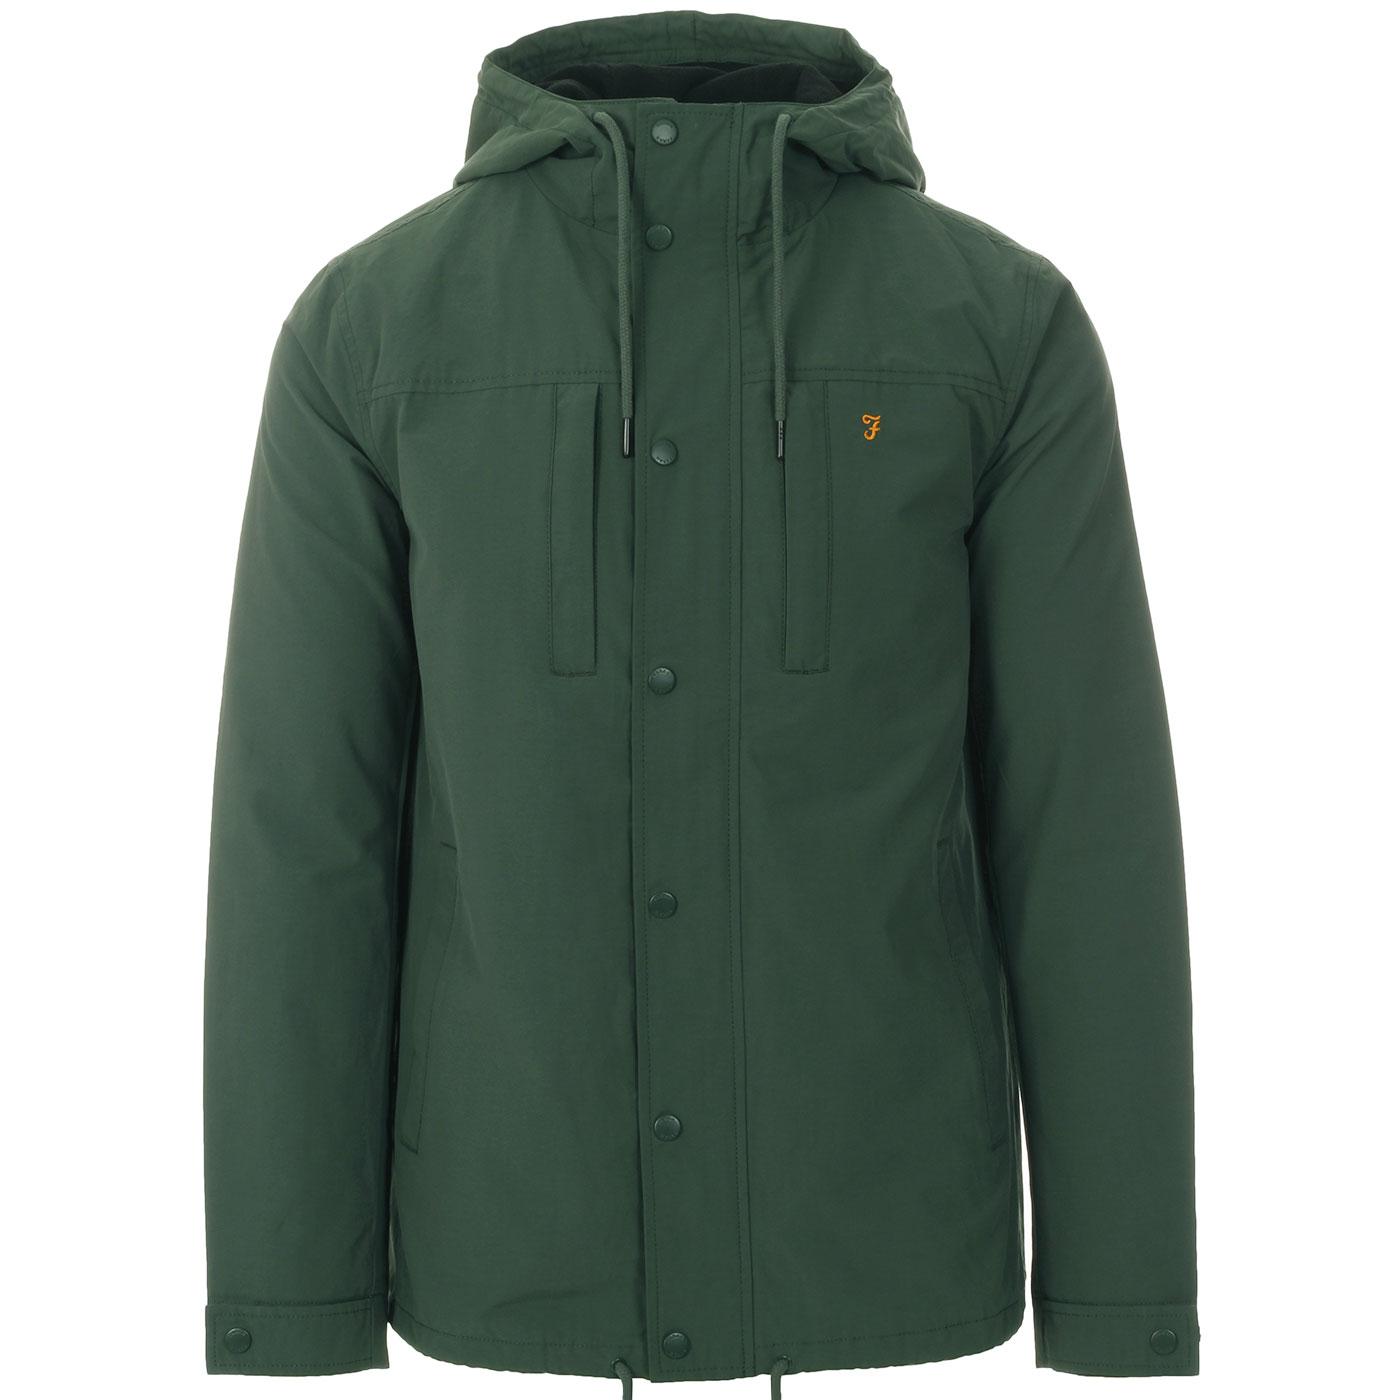 Maguire FARAH Retro Mod Fleece Lined Hooded Jacket